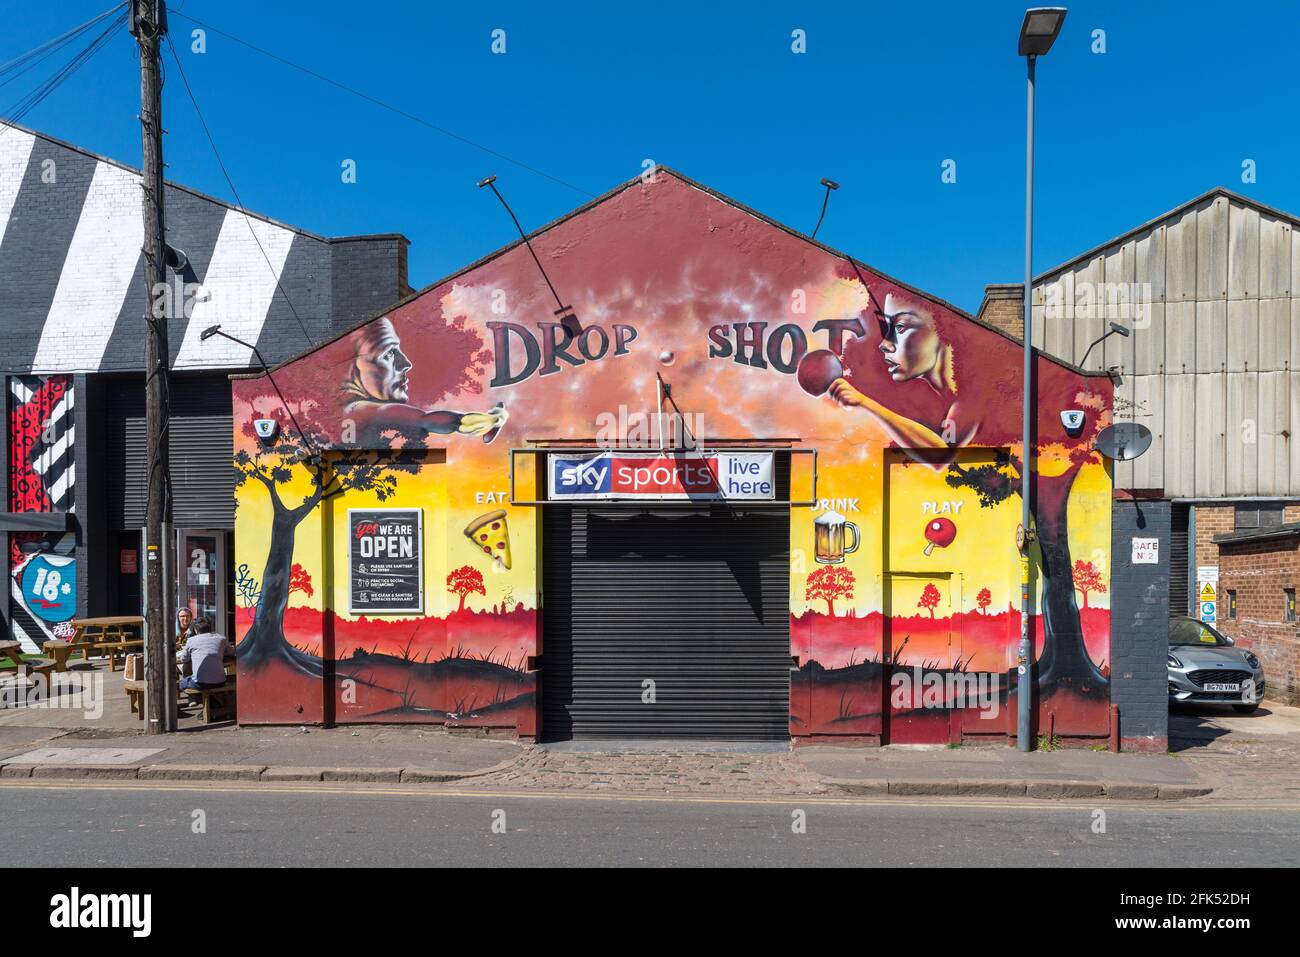 Le Drop Shot de Digbeth, Birmingham est un bar et un lieu de divertissement avec tennis de table Banque D'Images